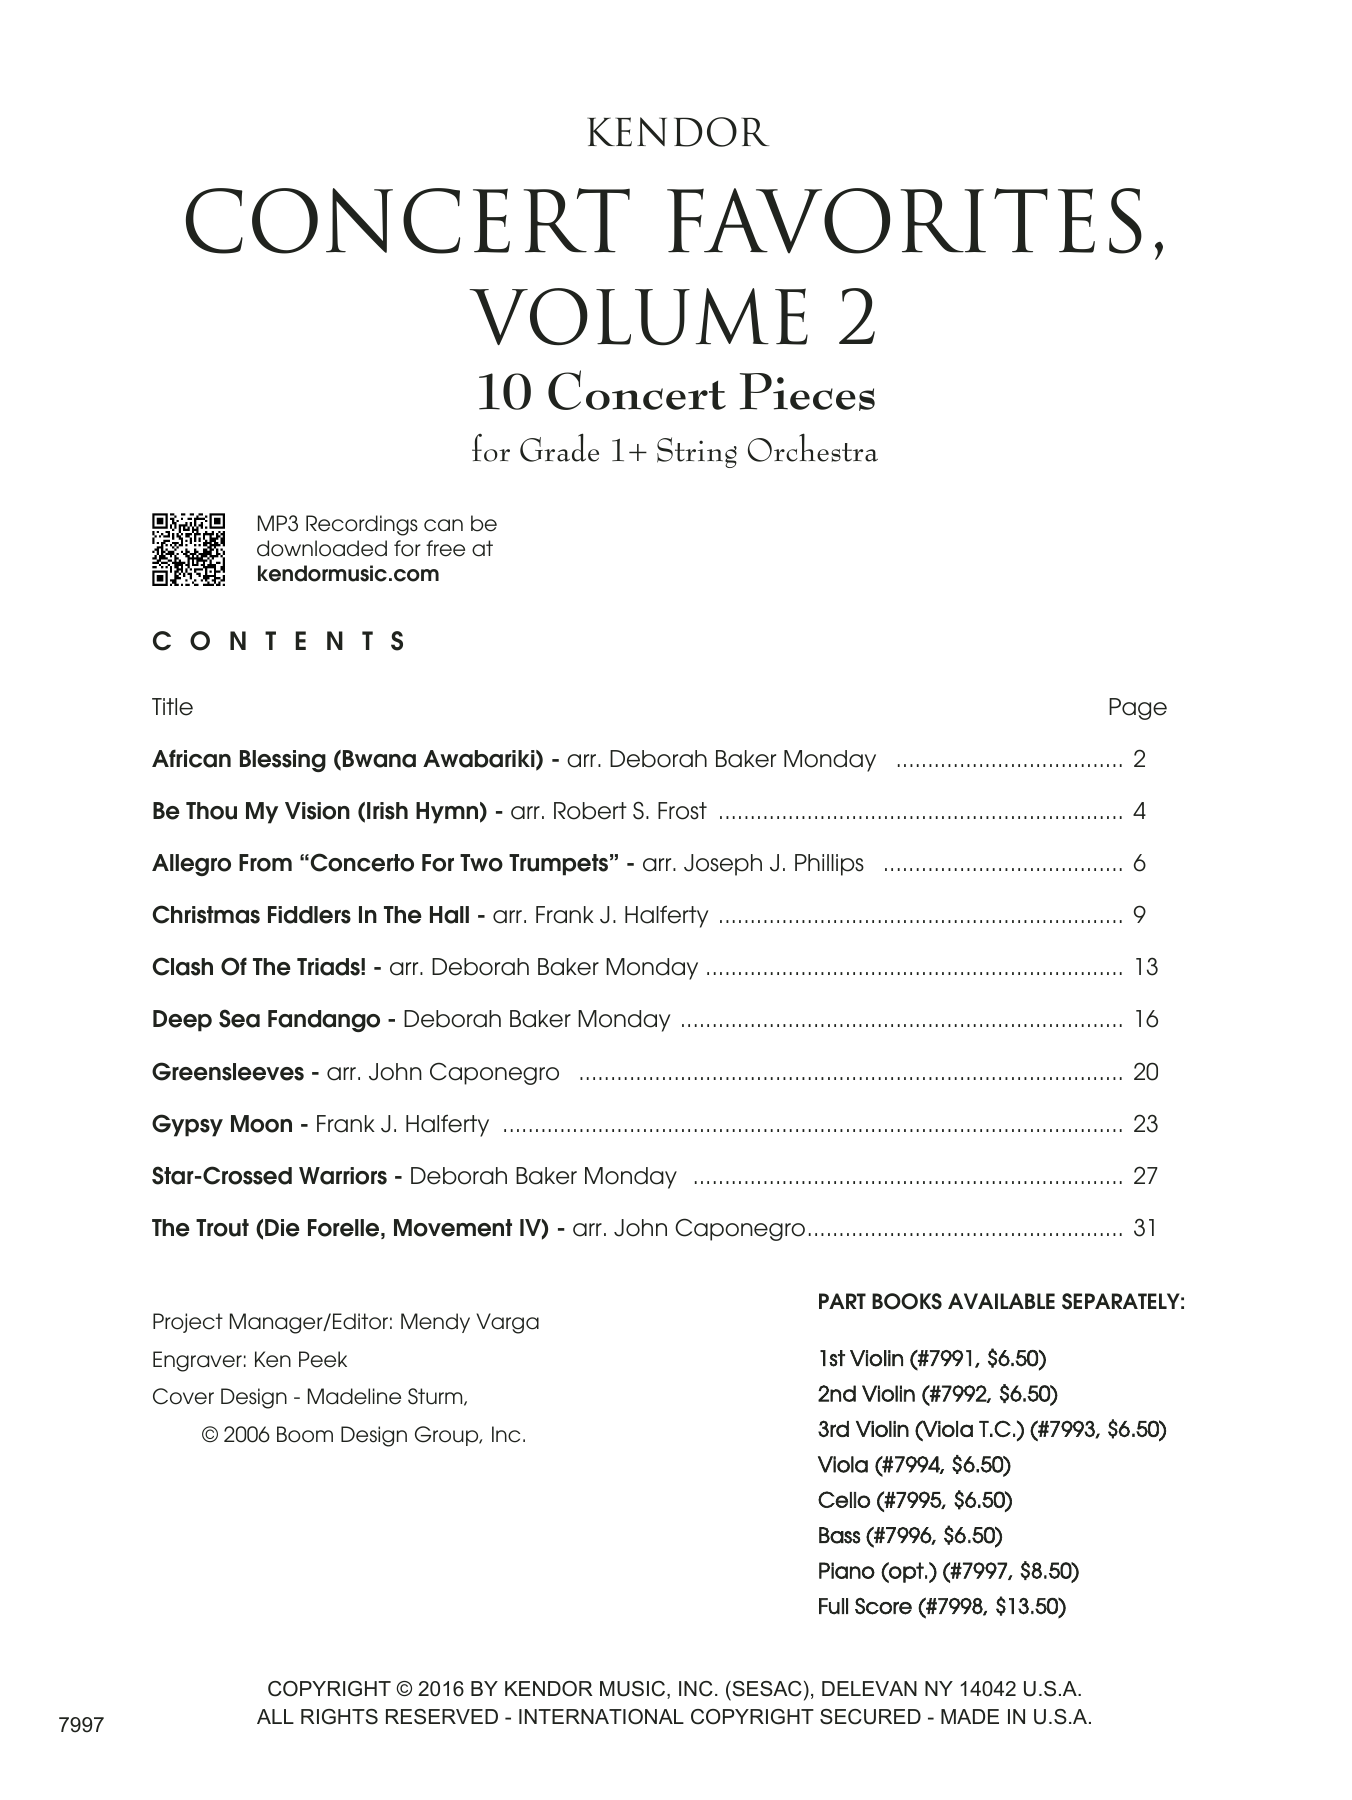 Download Various Kendor Concert Favorites, Volume 2 - Pi Sheet Music